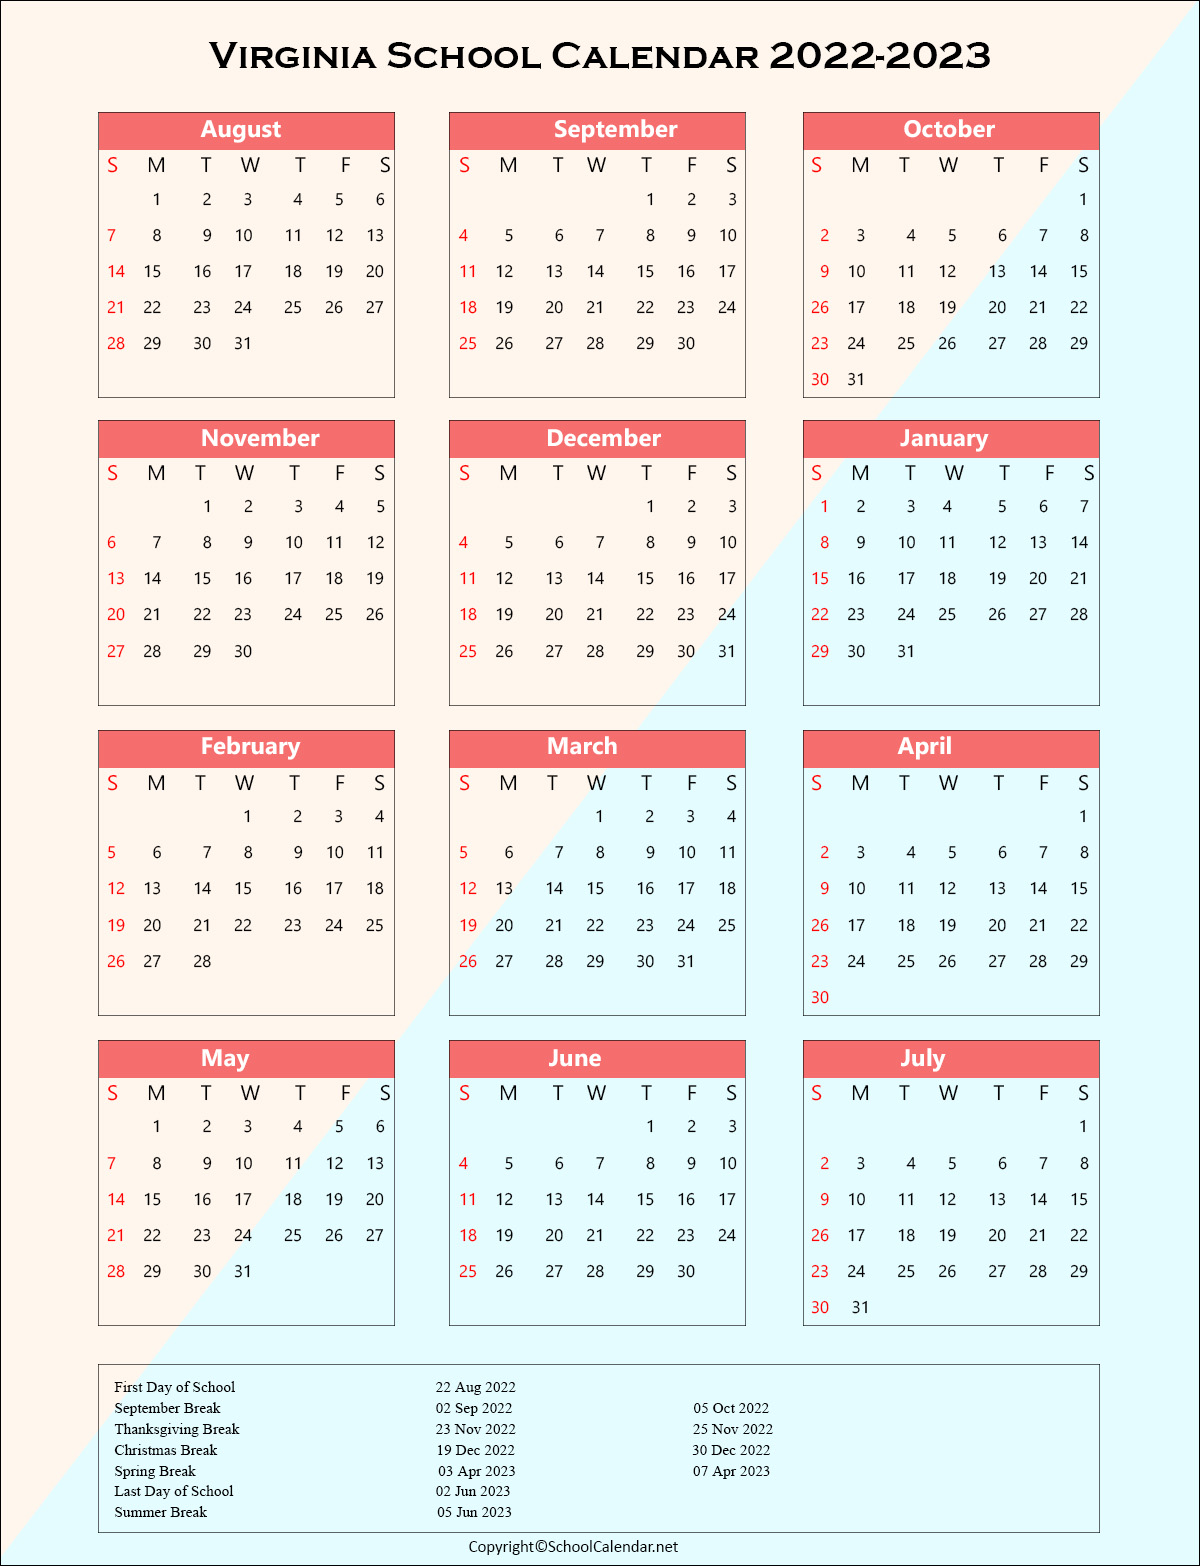 Virginia School Holiday Calendar 2022